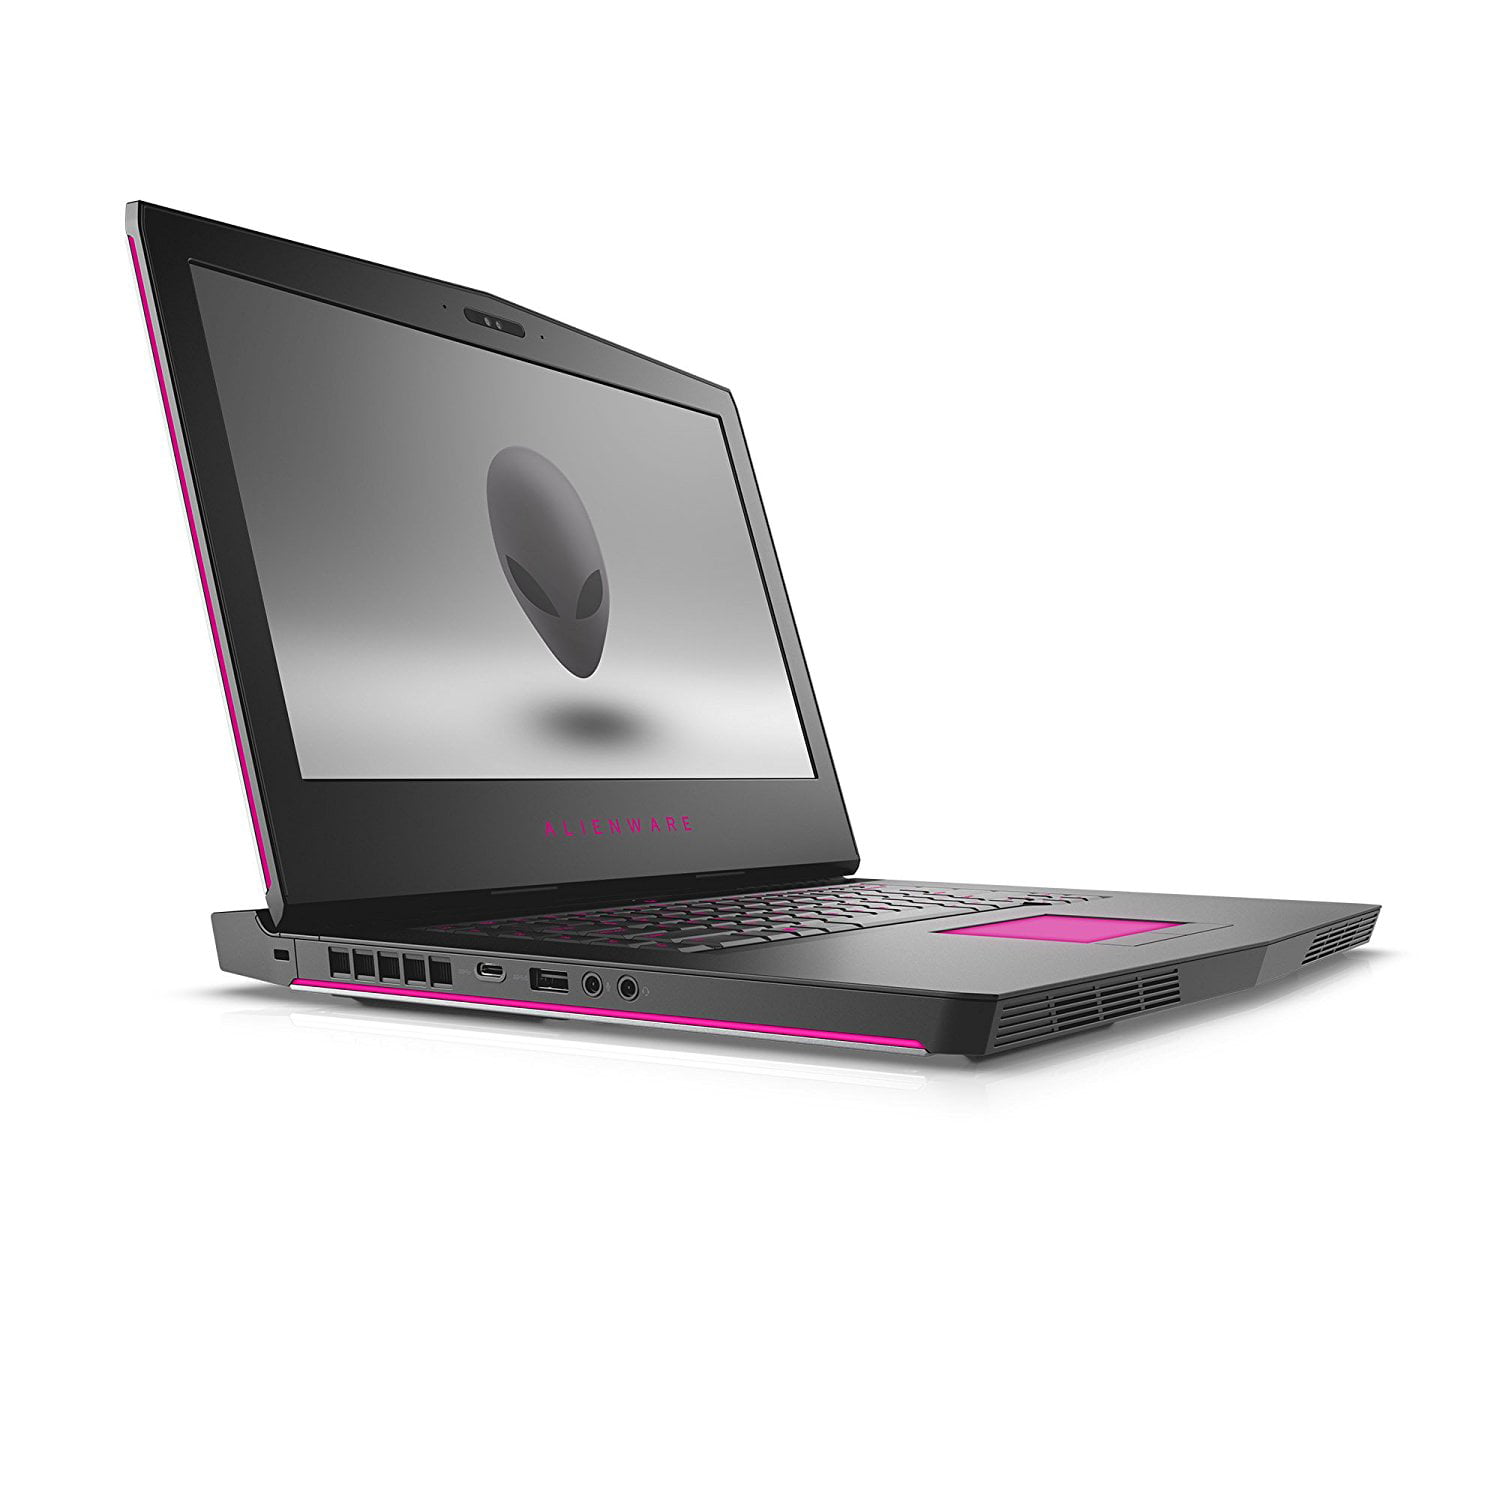 Used AW15R3-7002SLV-PUS 15.6" Gaming Laptop (7th Generation Intel Core 8GB RAM, 256 Silver) with NVIDIA GTX 1060 - Walmart.com